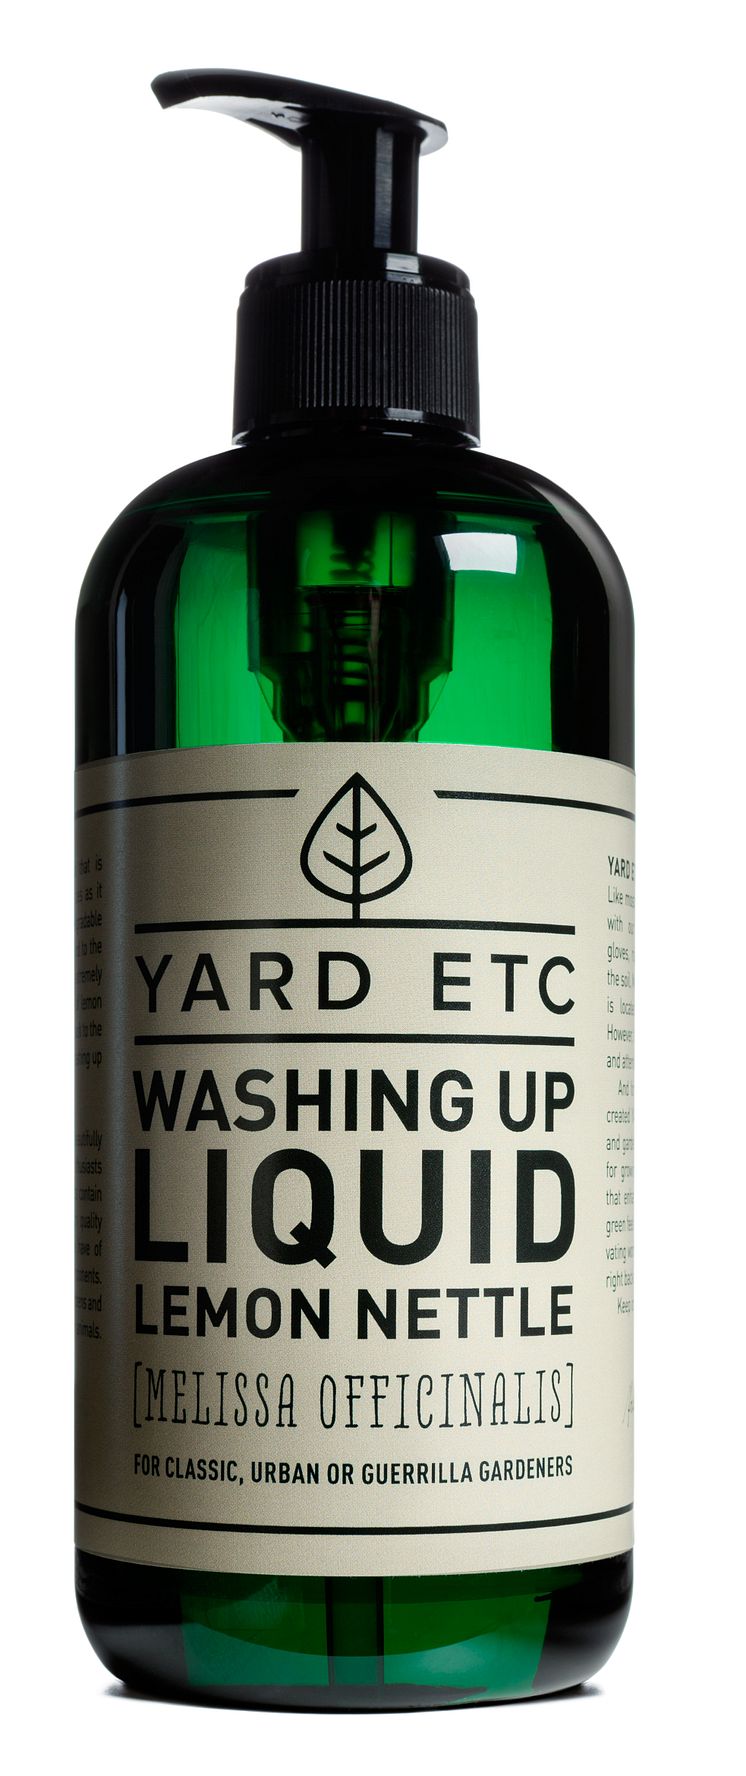 YARD ETC. Wasing up liquid Lemon nettle